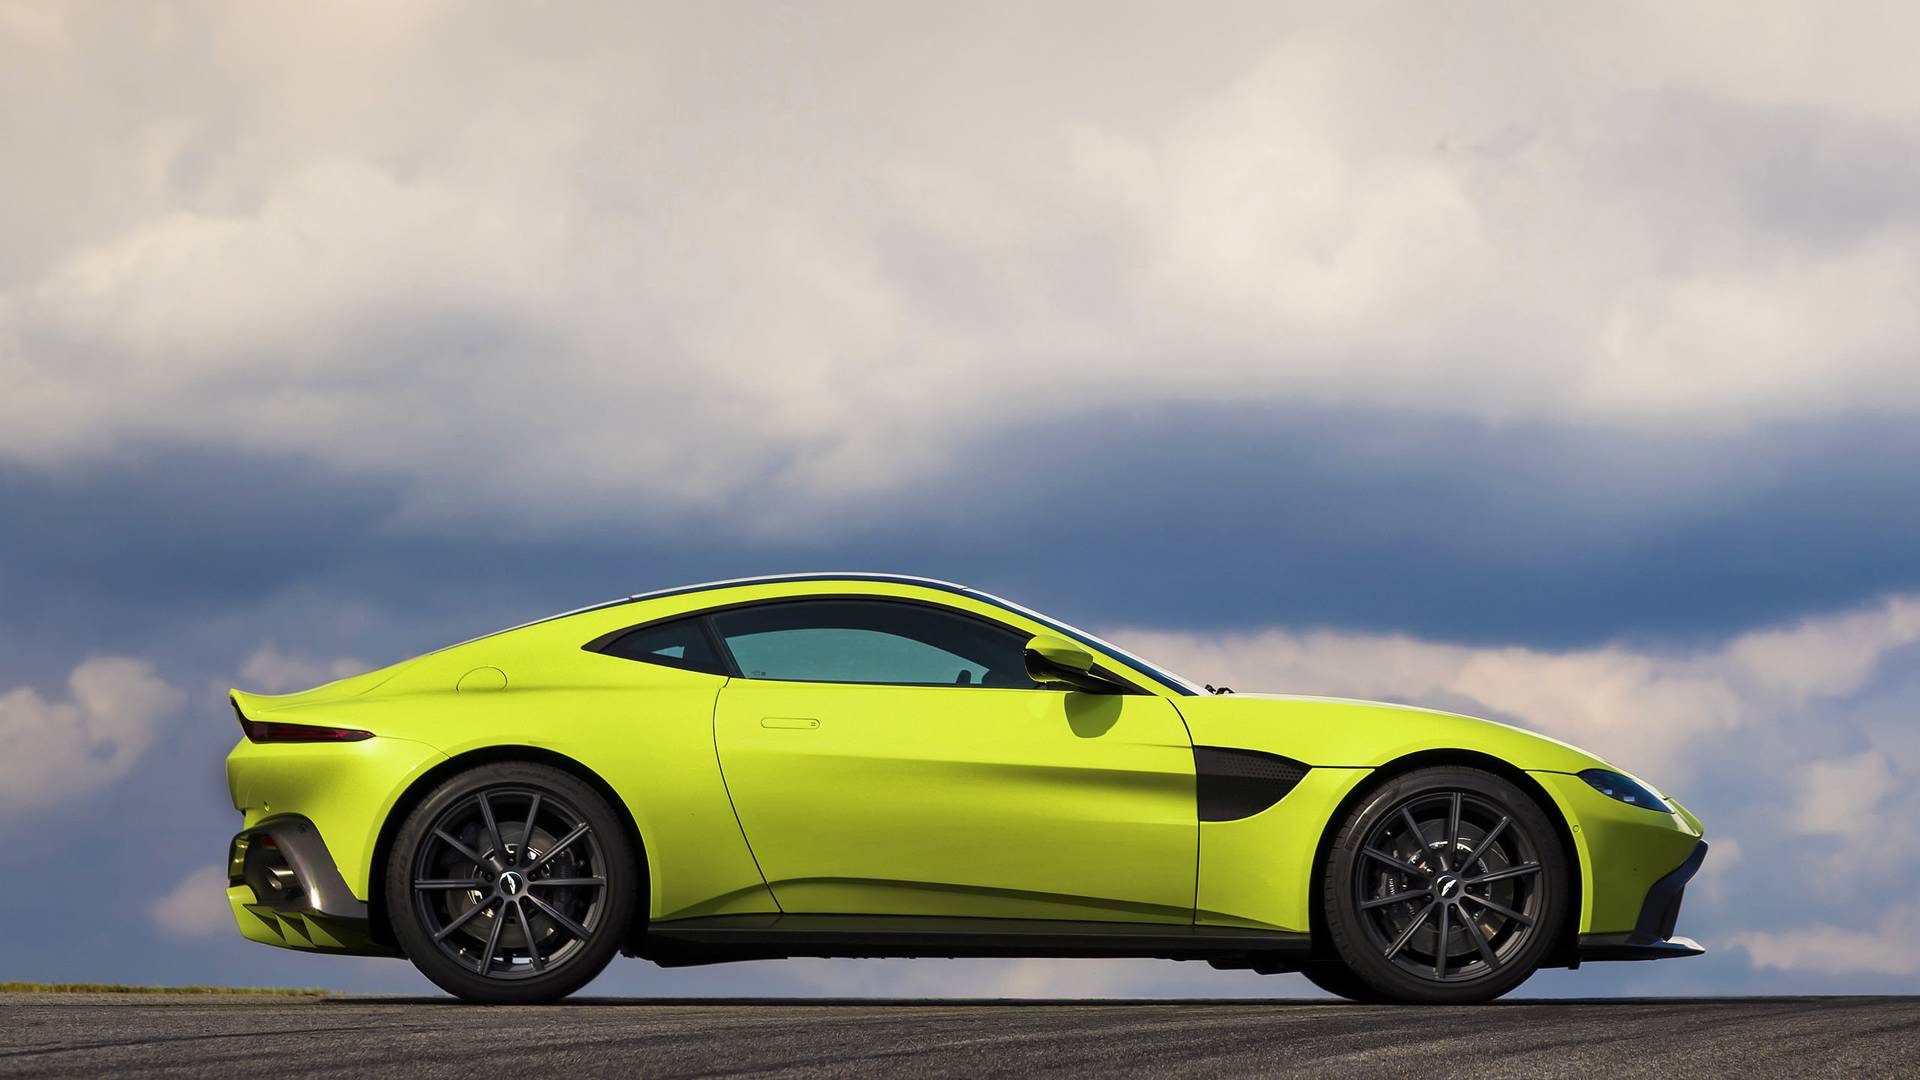 Luxury And Power: The 2018 Aston Martin Vantage GTE